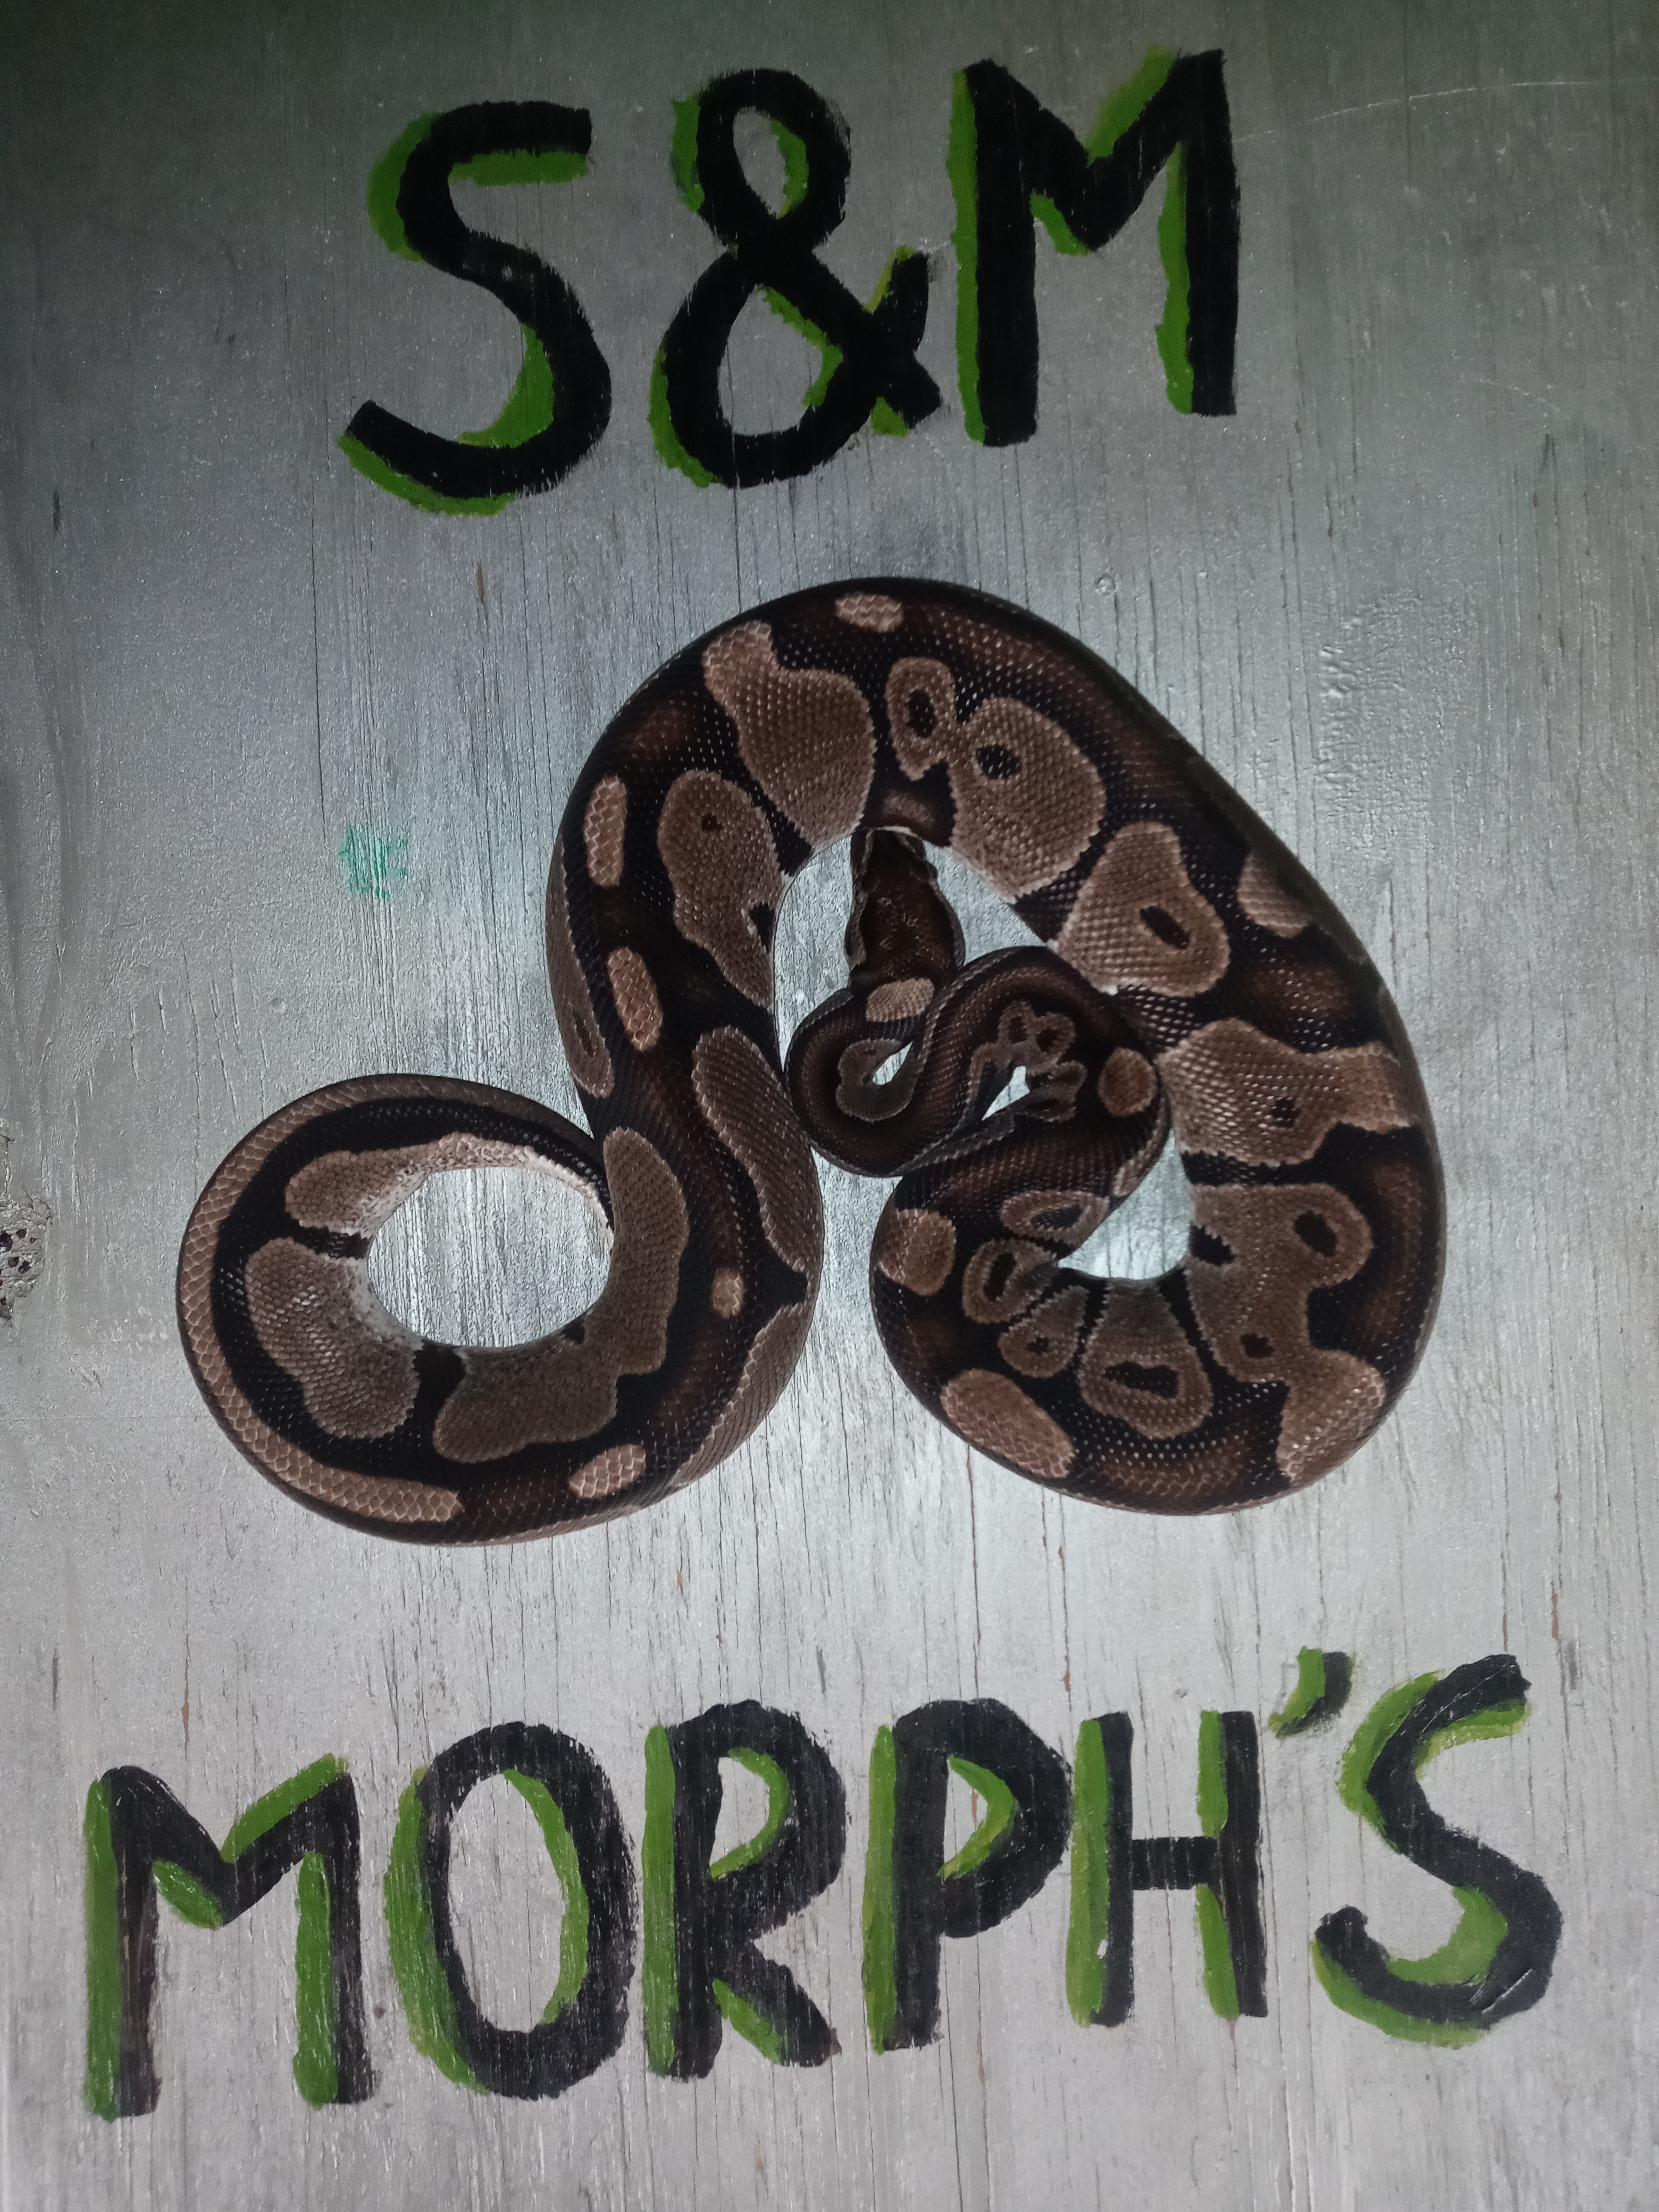 Jolliff Axanthic Ball Python by S&M Morph's